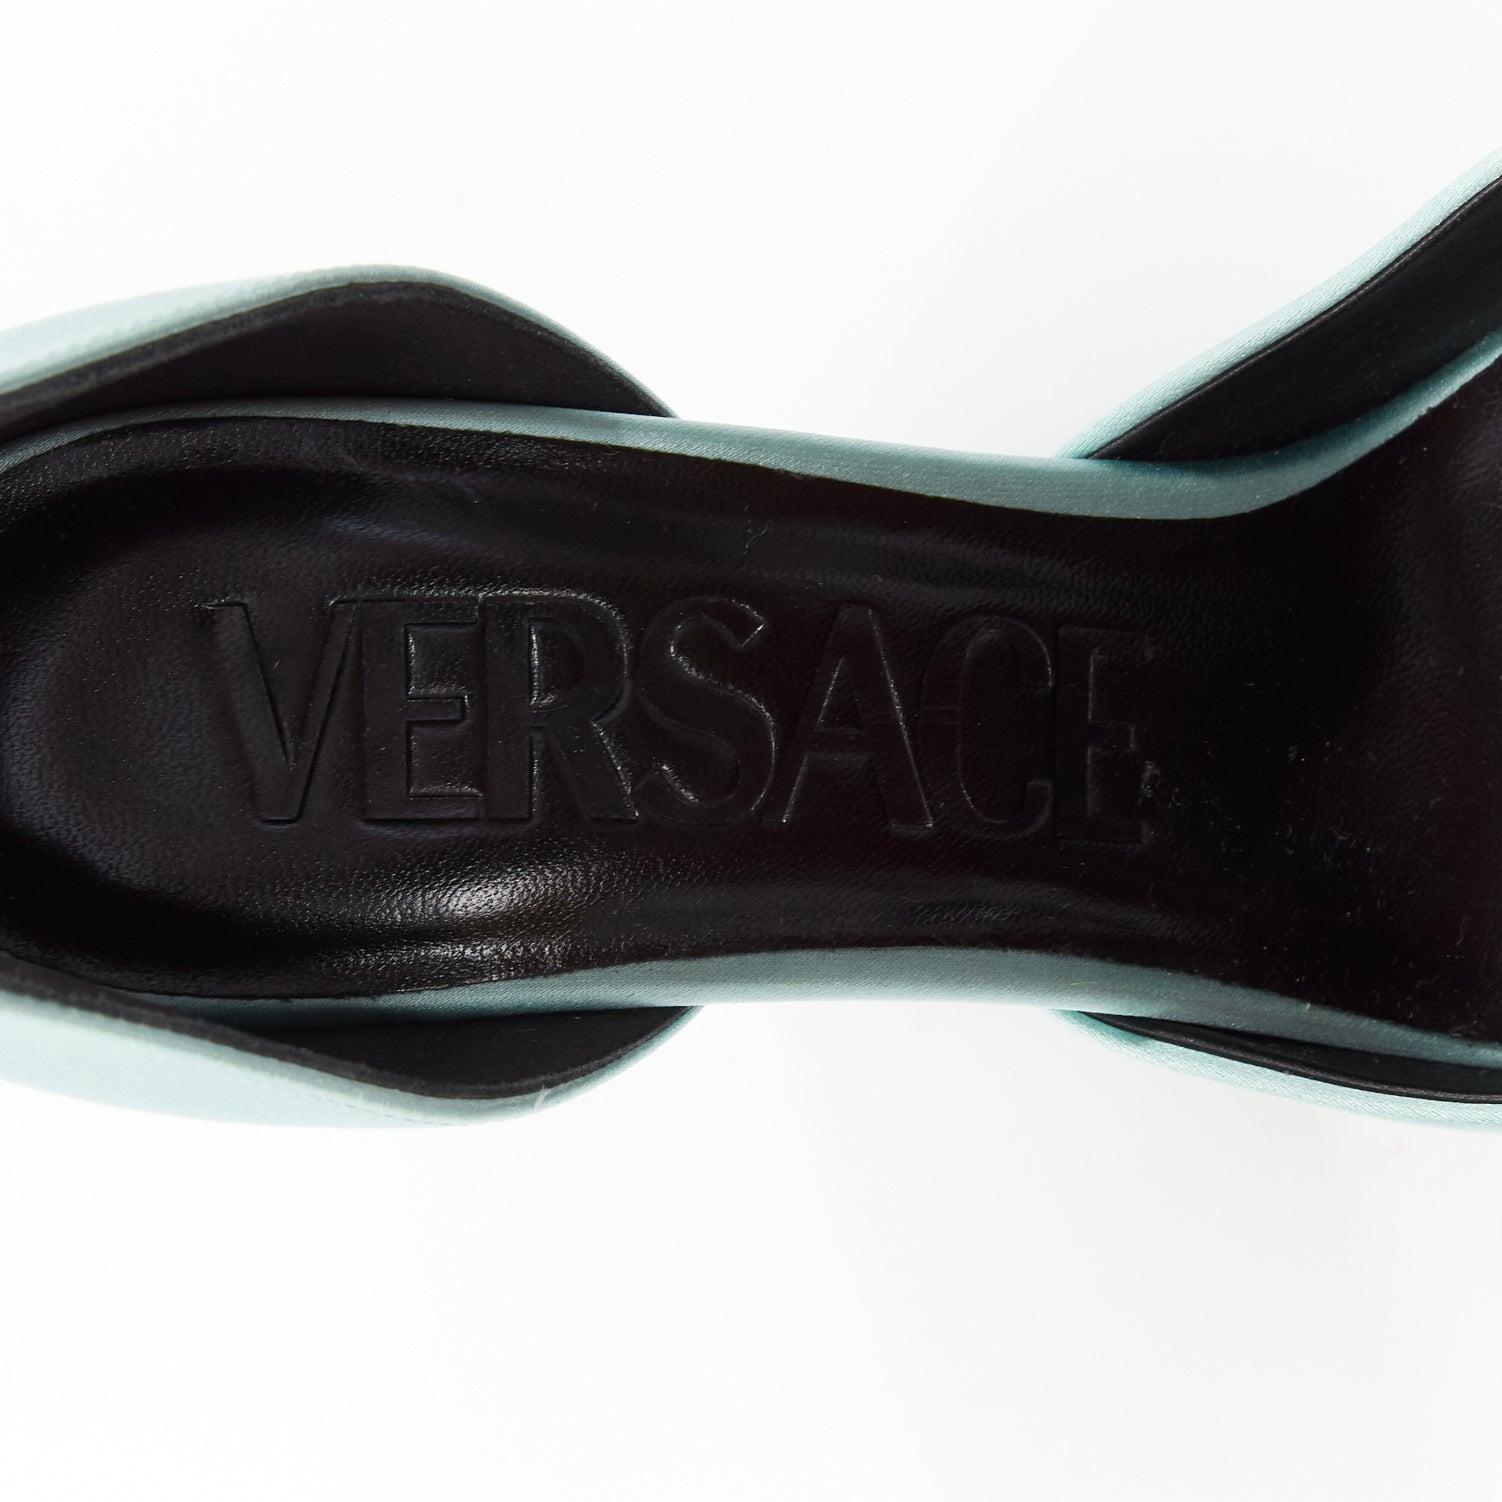 VERSACE Medusa Aevitas sky blue satin Medusa charm platform heels 37.5 For Sale 5